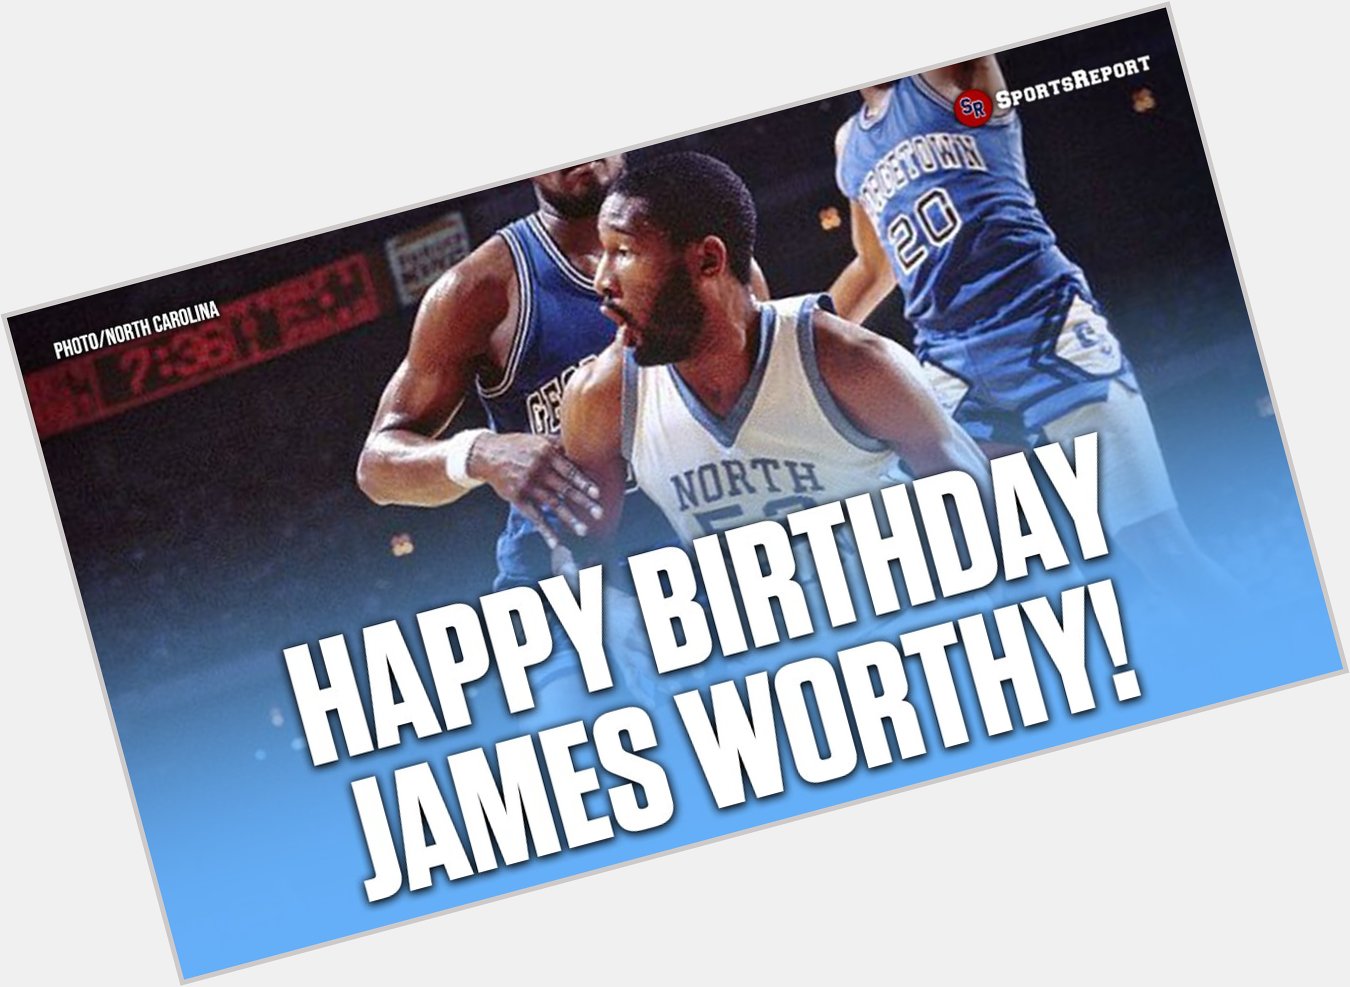 North Carolina Fans, let\s wish Tar Heels Legend James Worthy a Happy Birthday! 